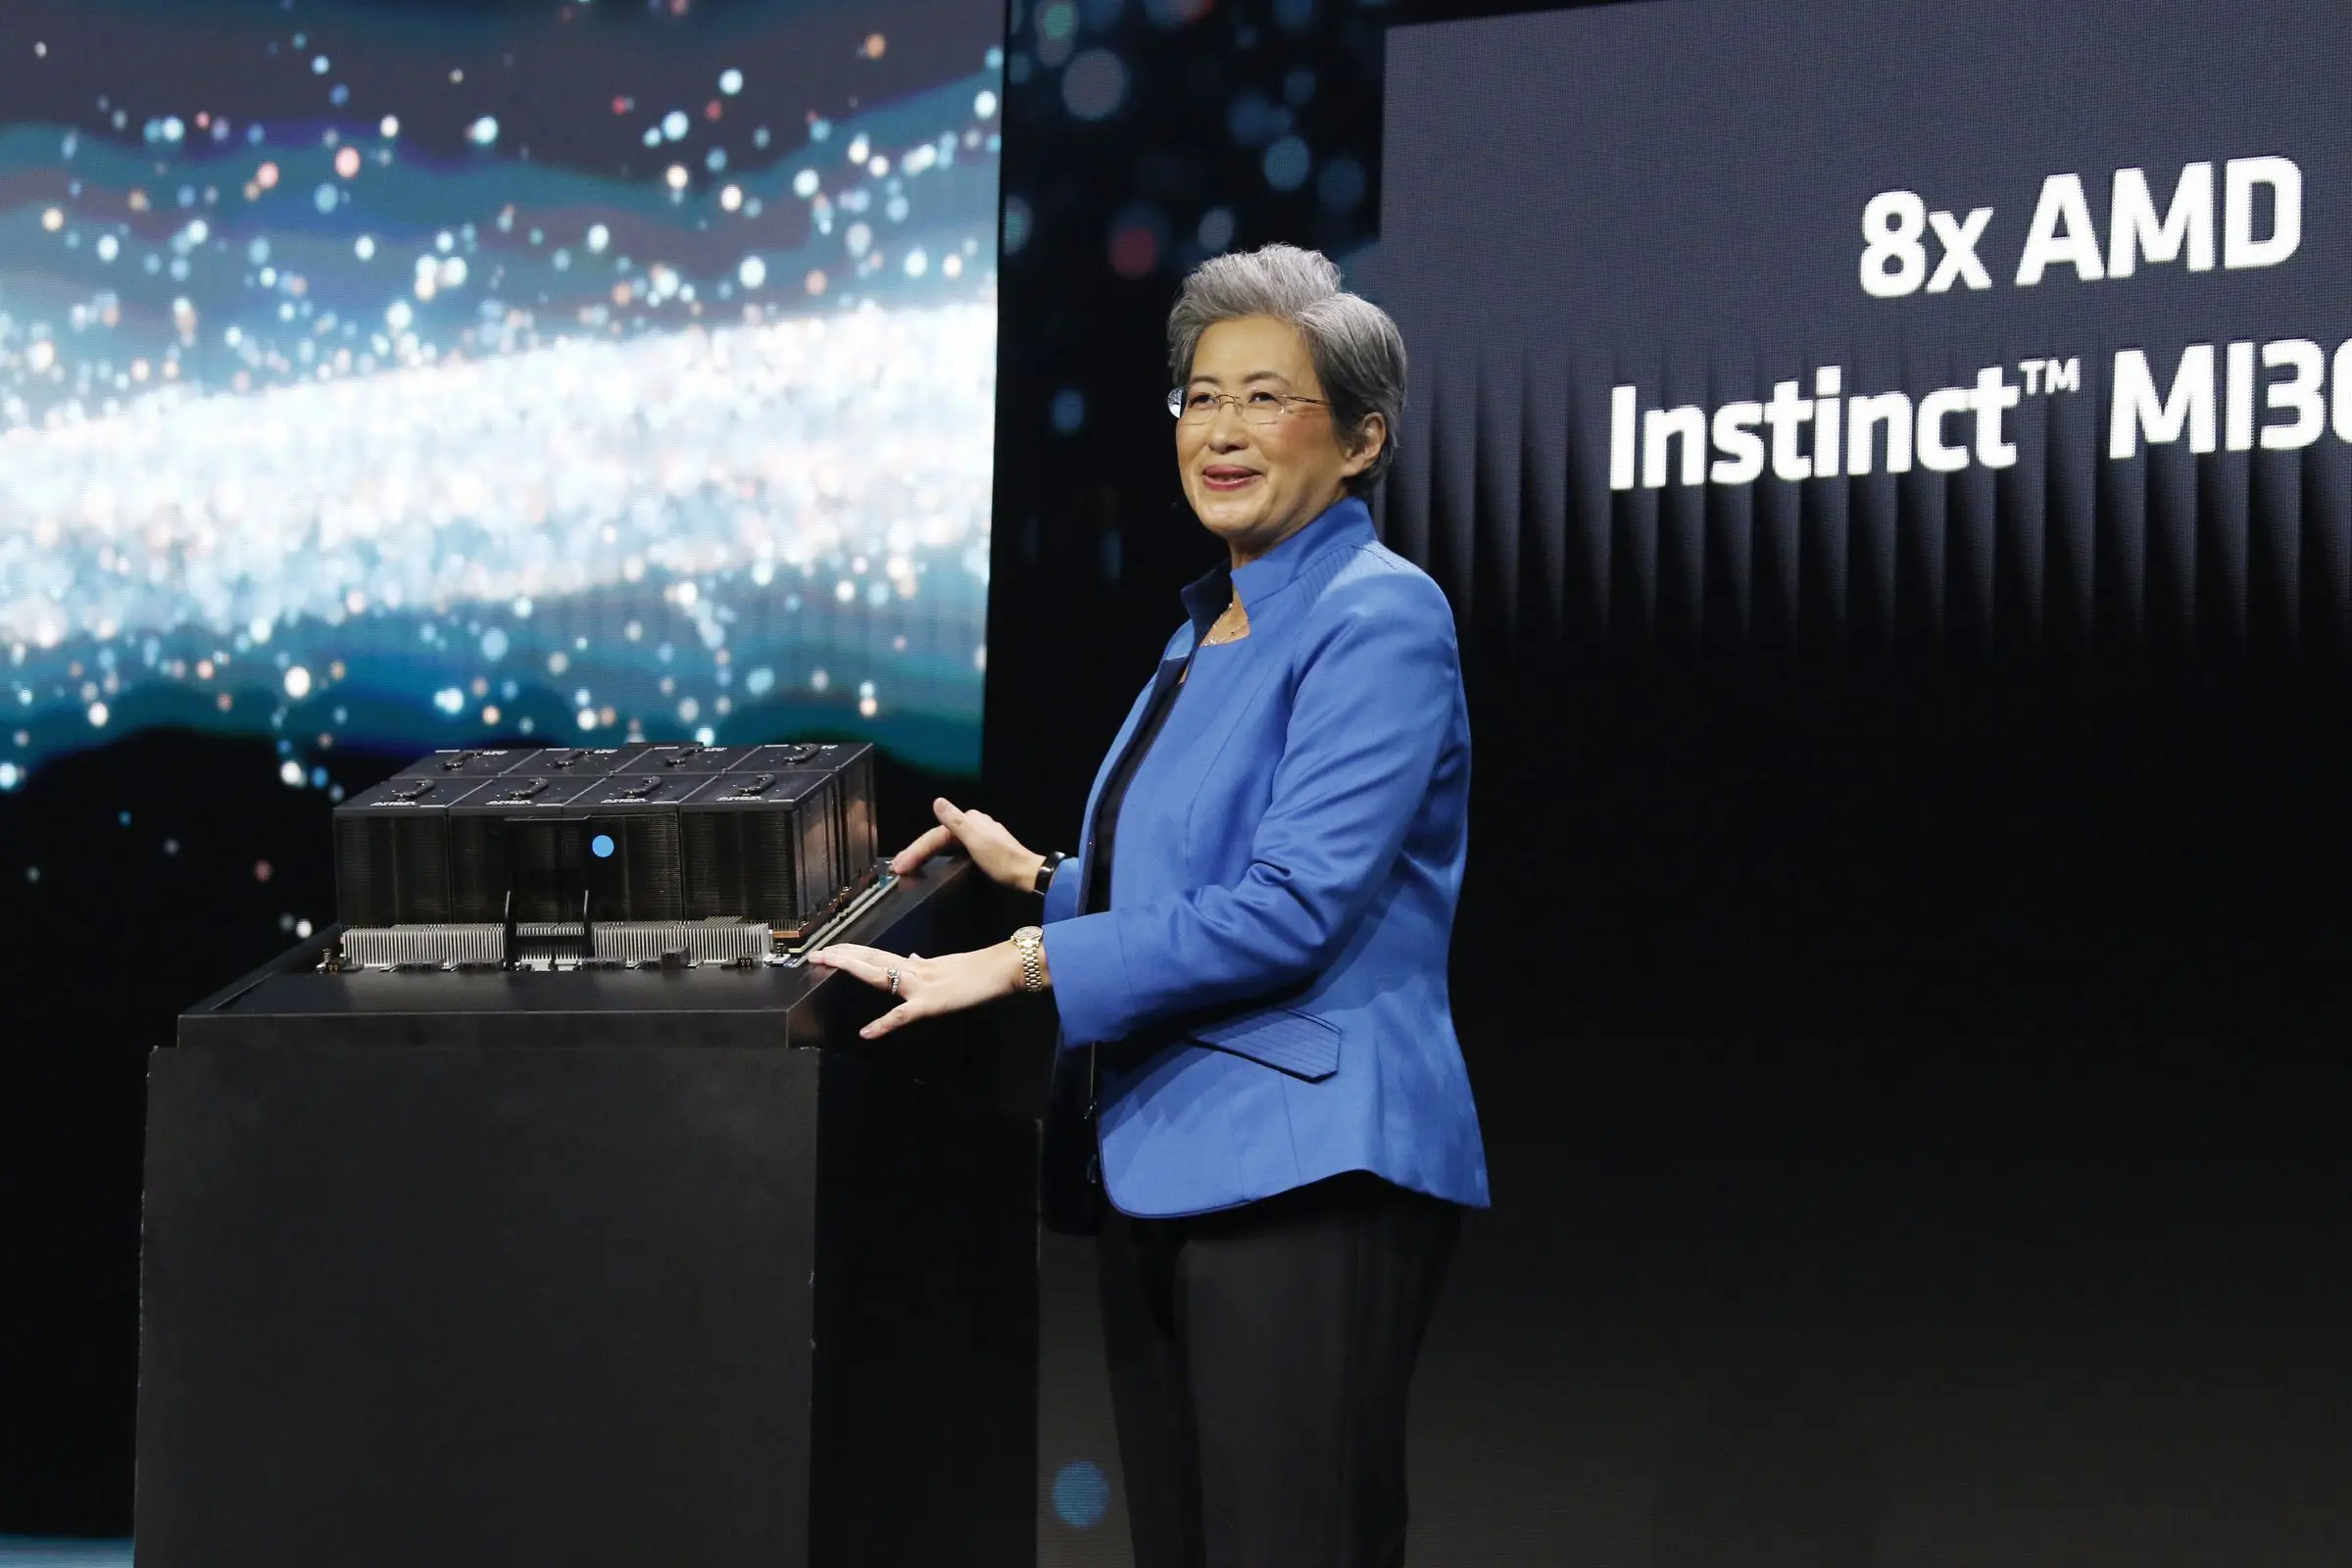 Lisa Su onstage with MI300X processors